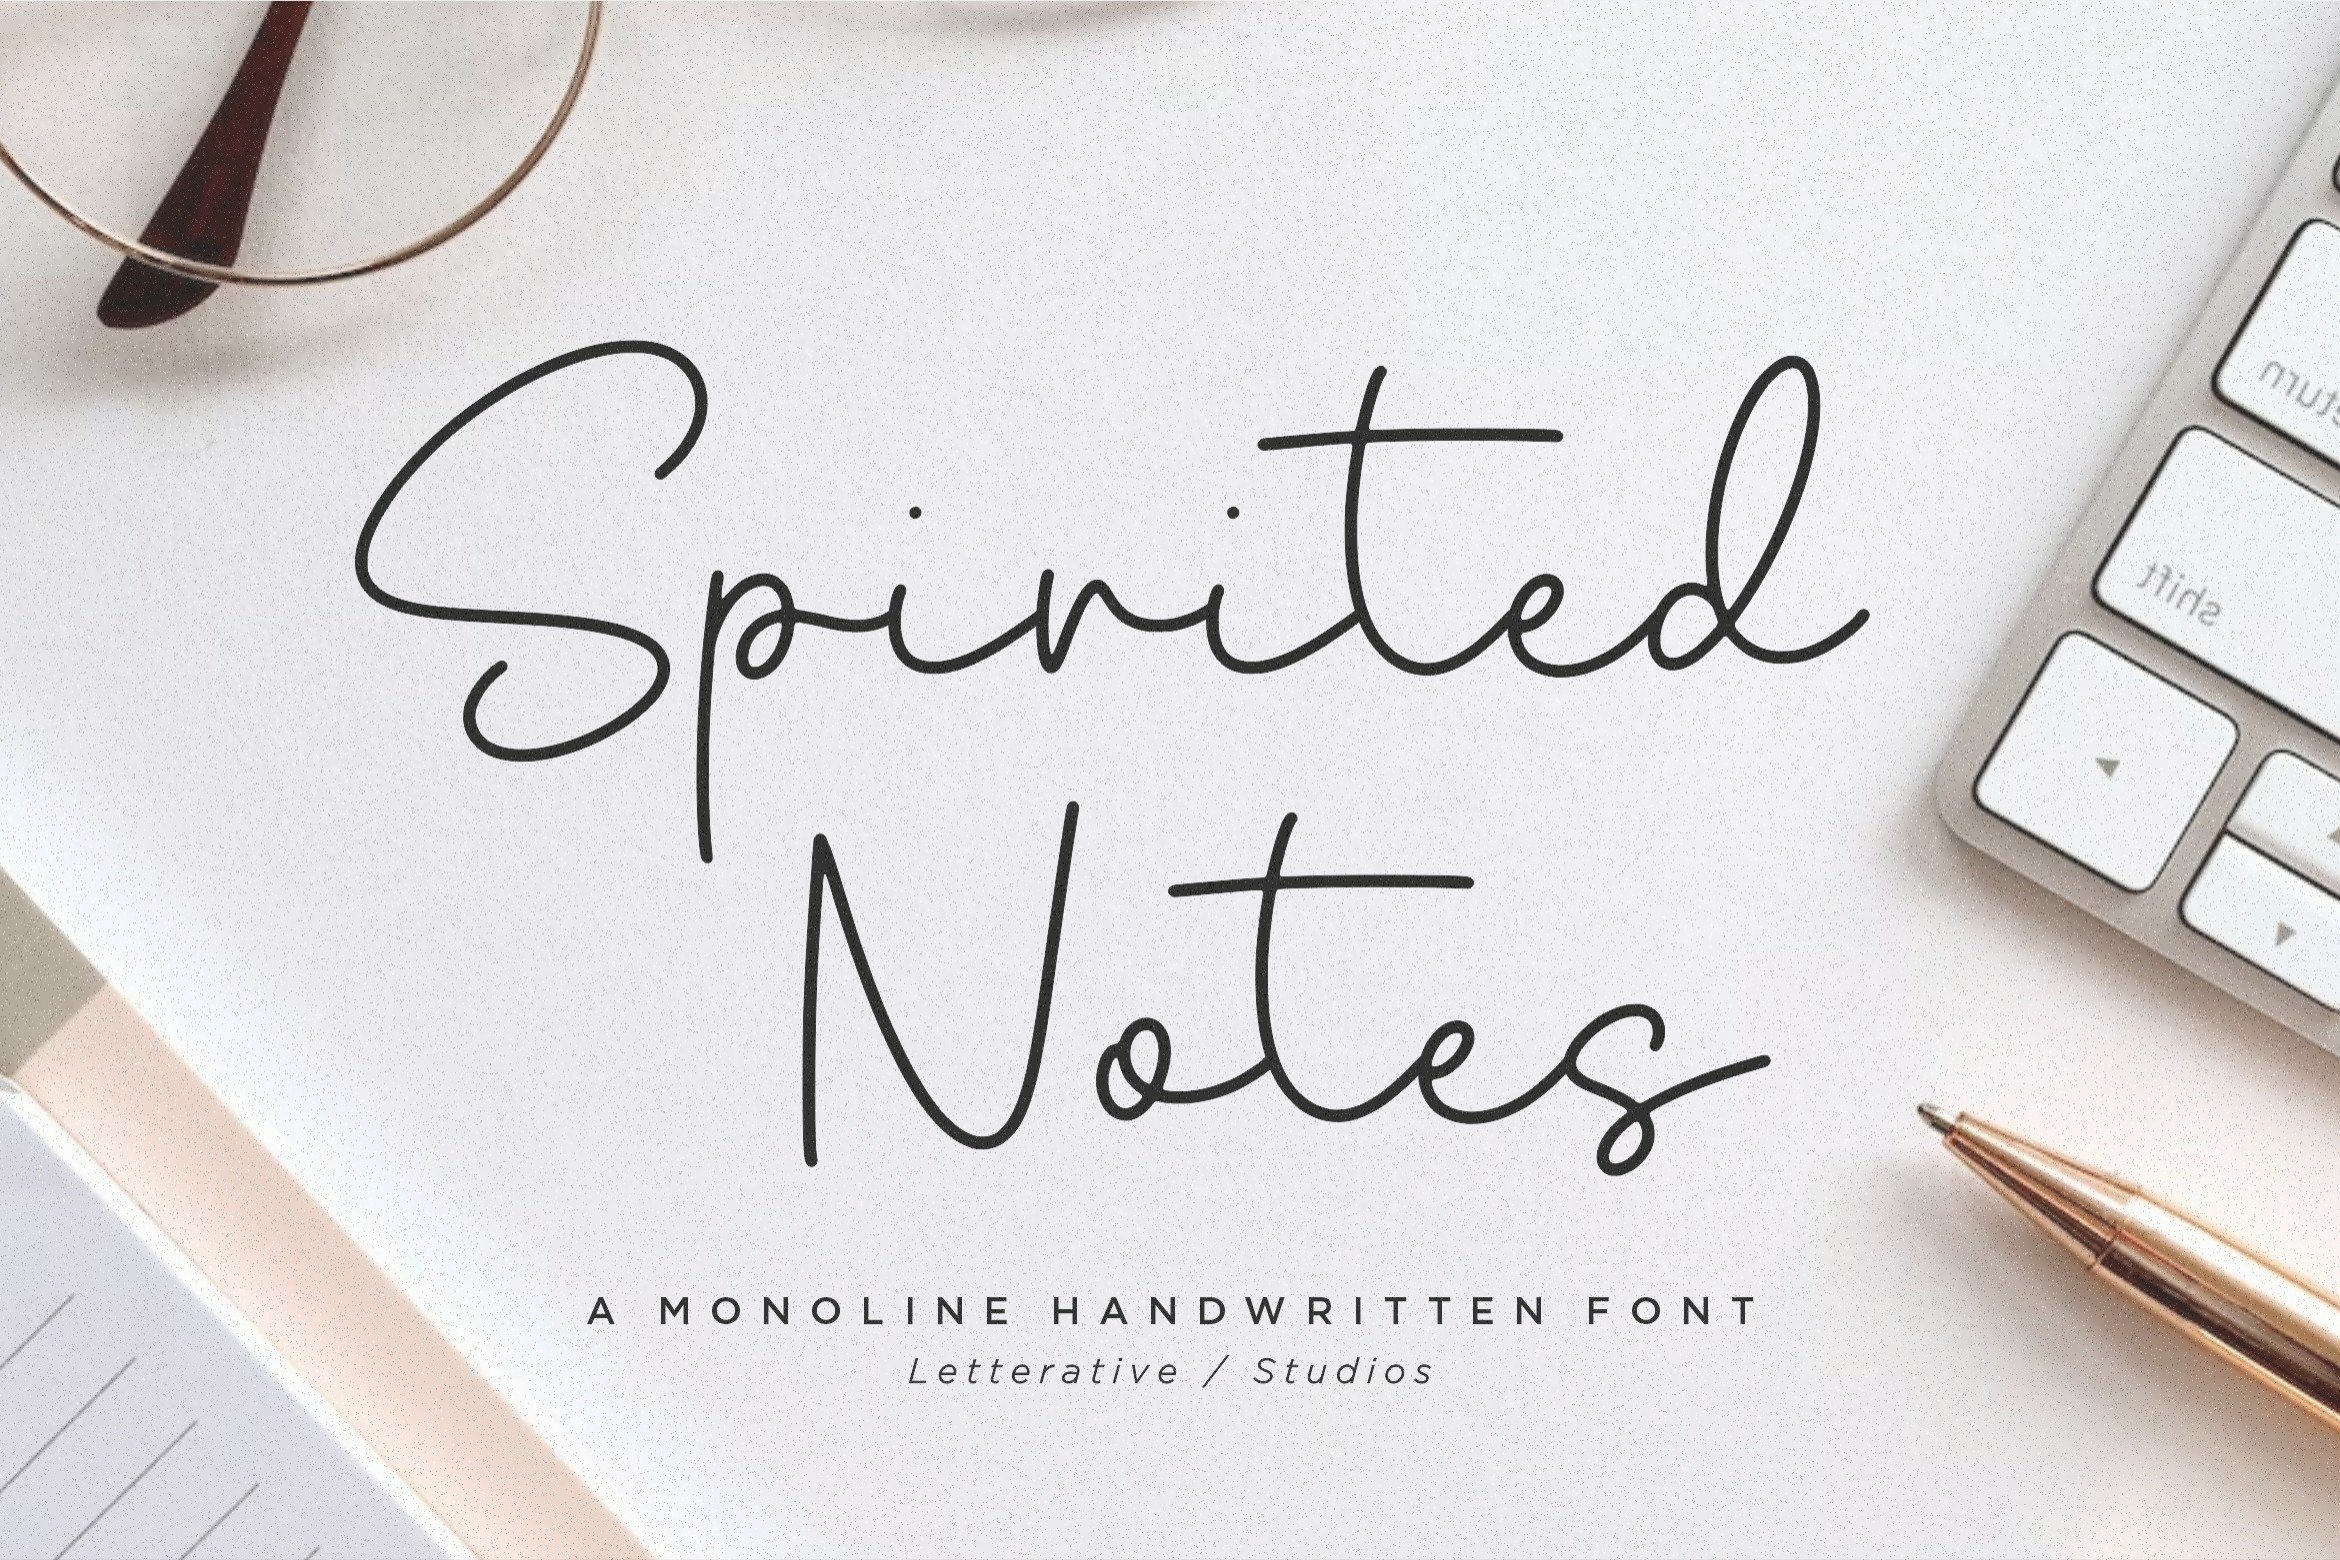 Spirited Notes1